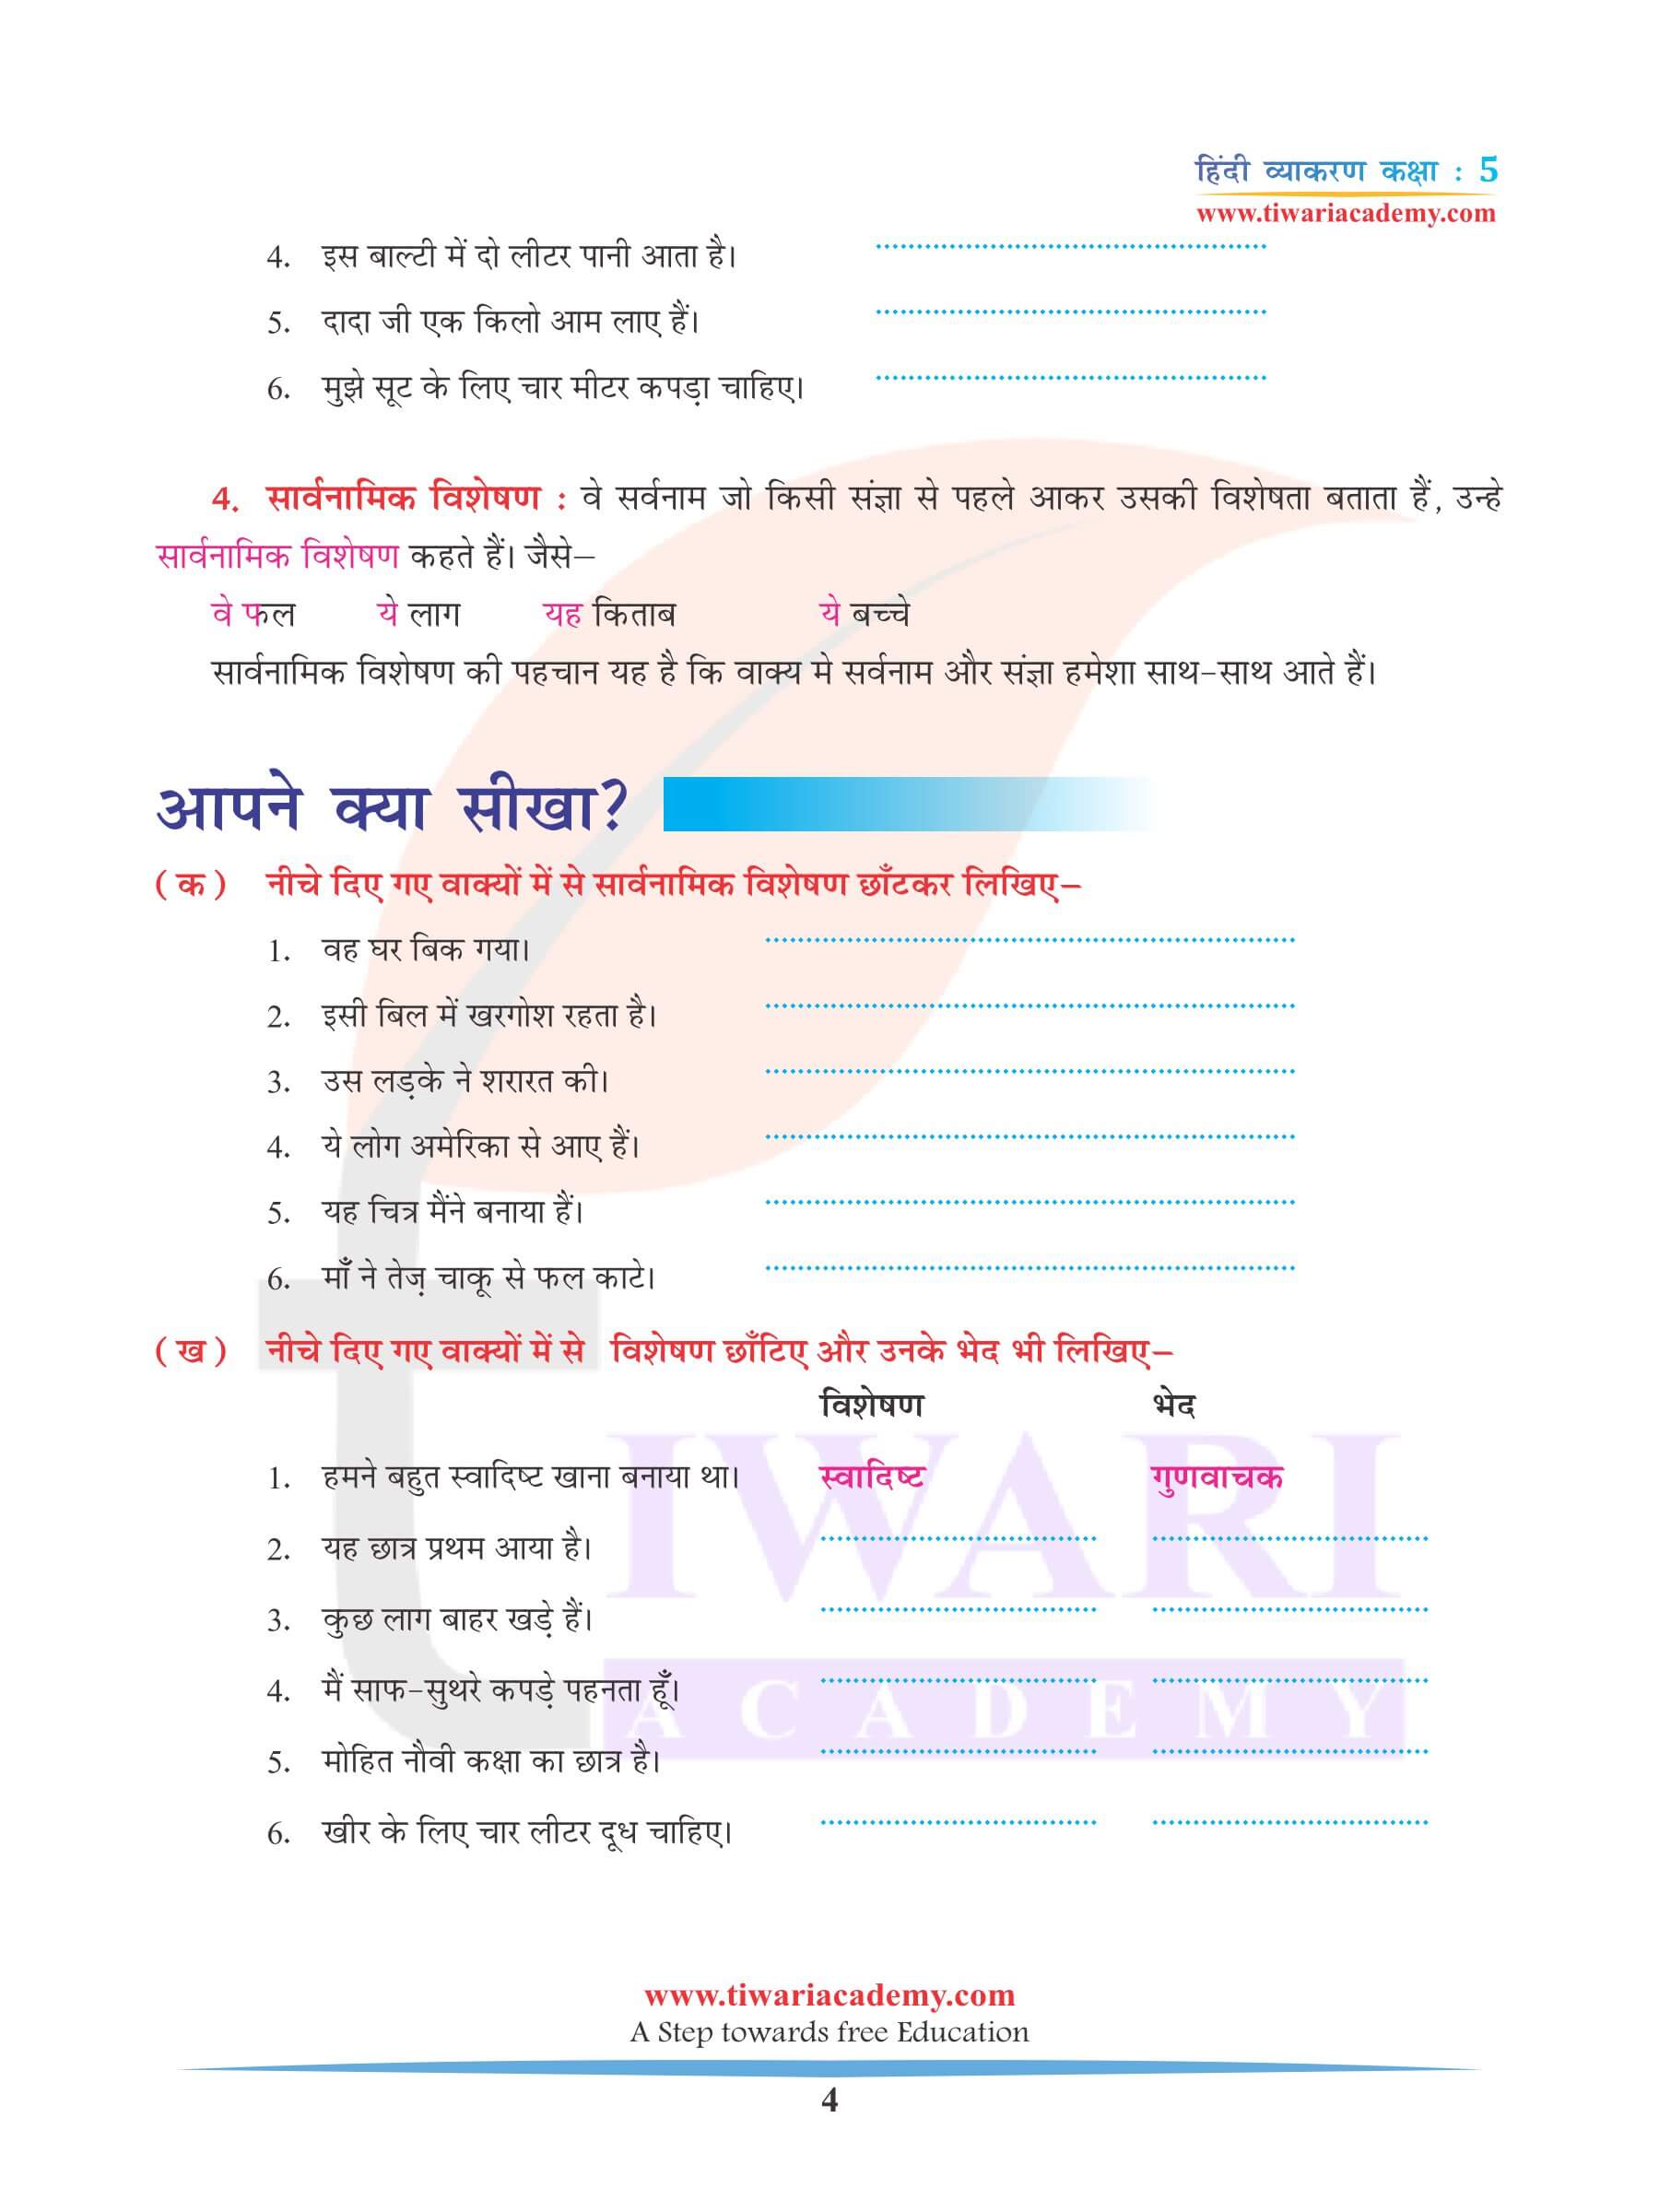 कक्षा 5 हिंदी व्याकरण विशेषण नोट्स